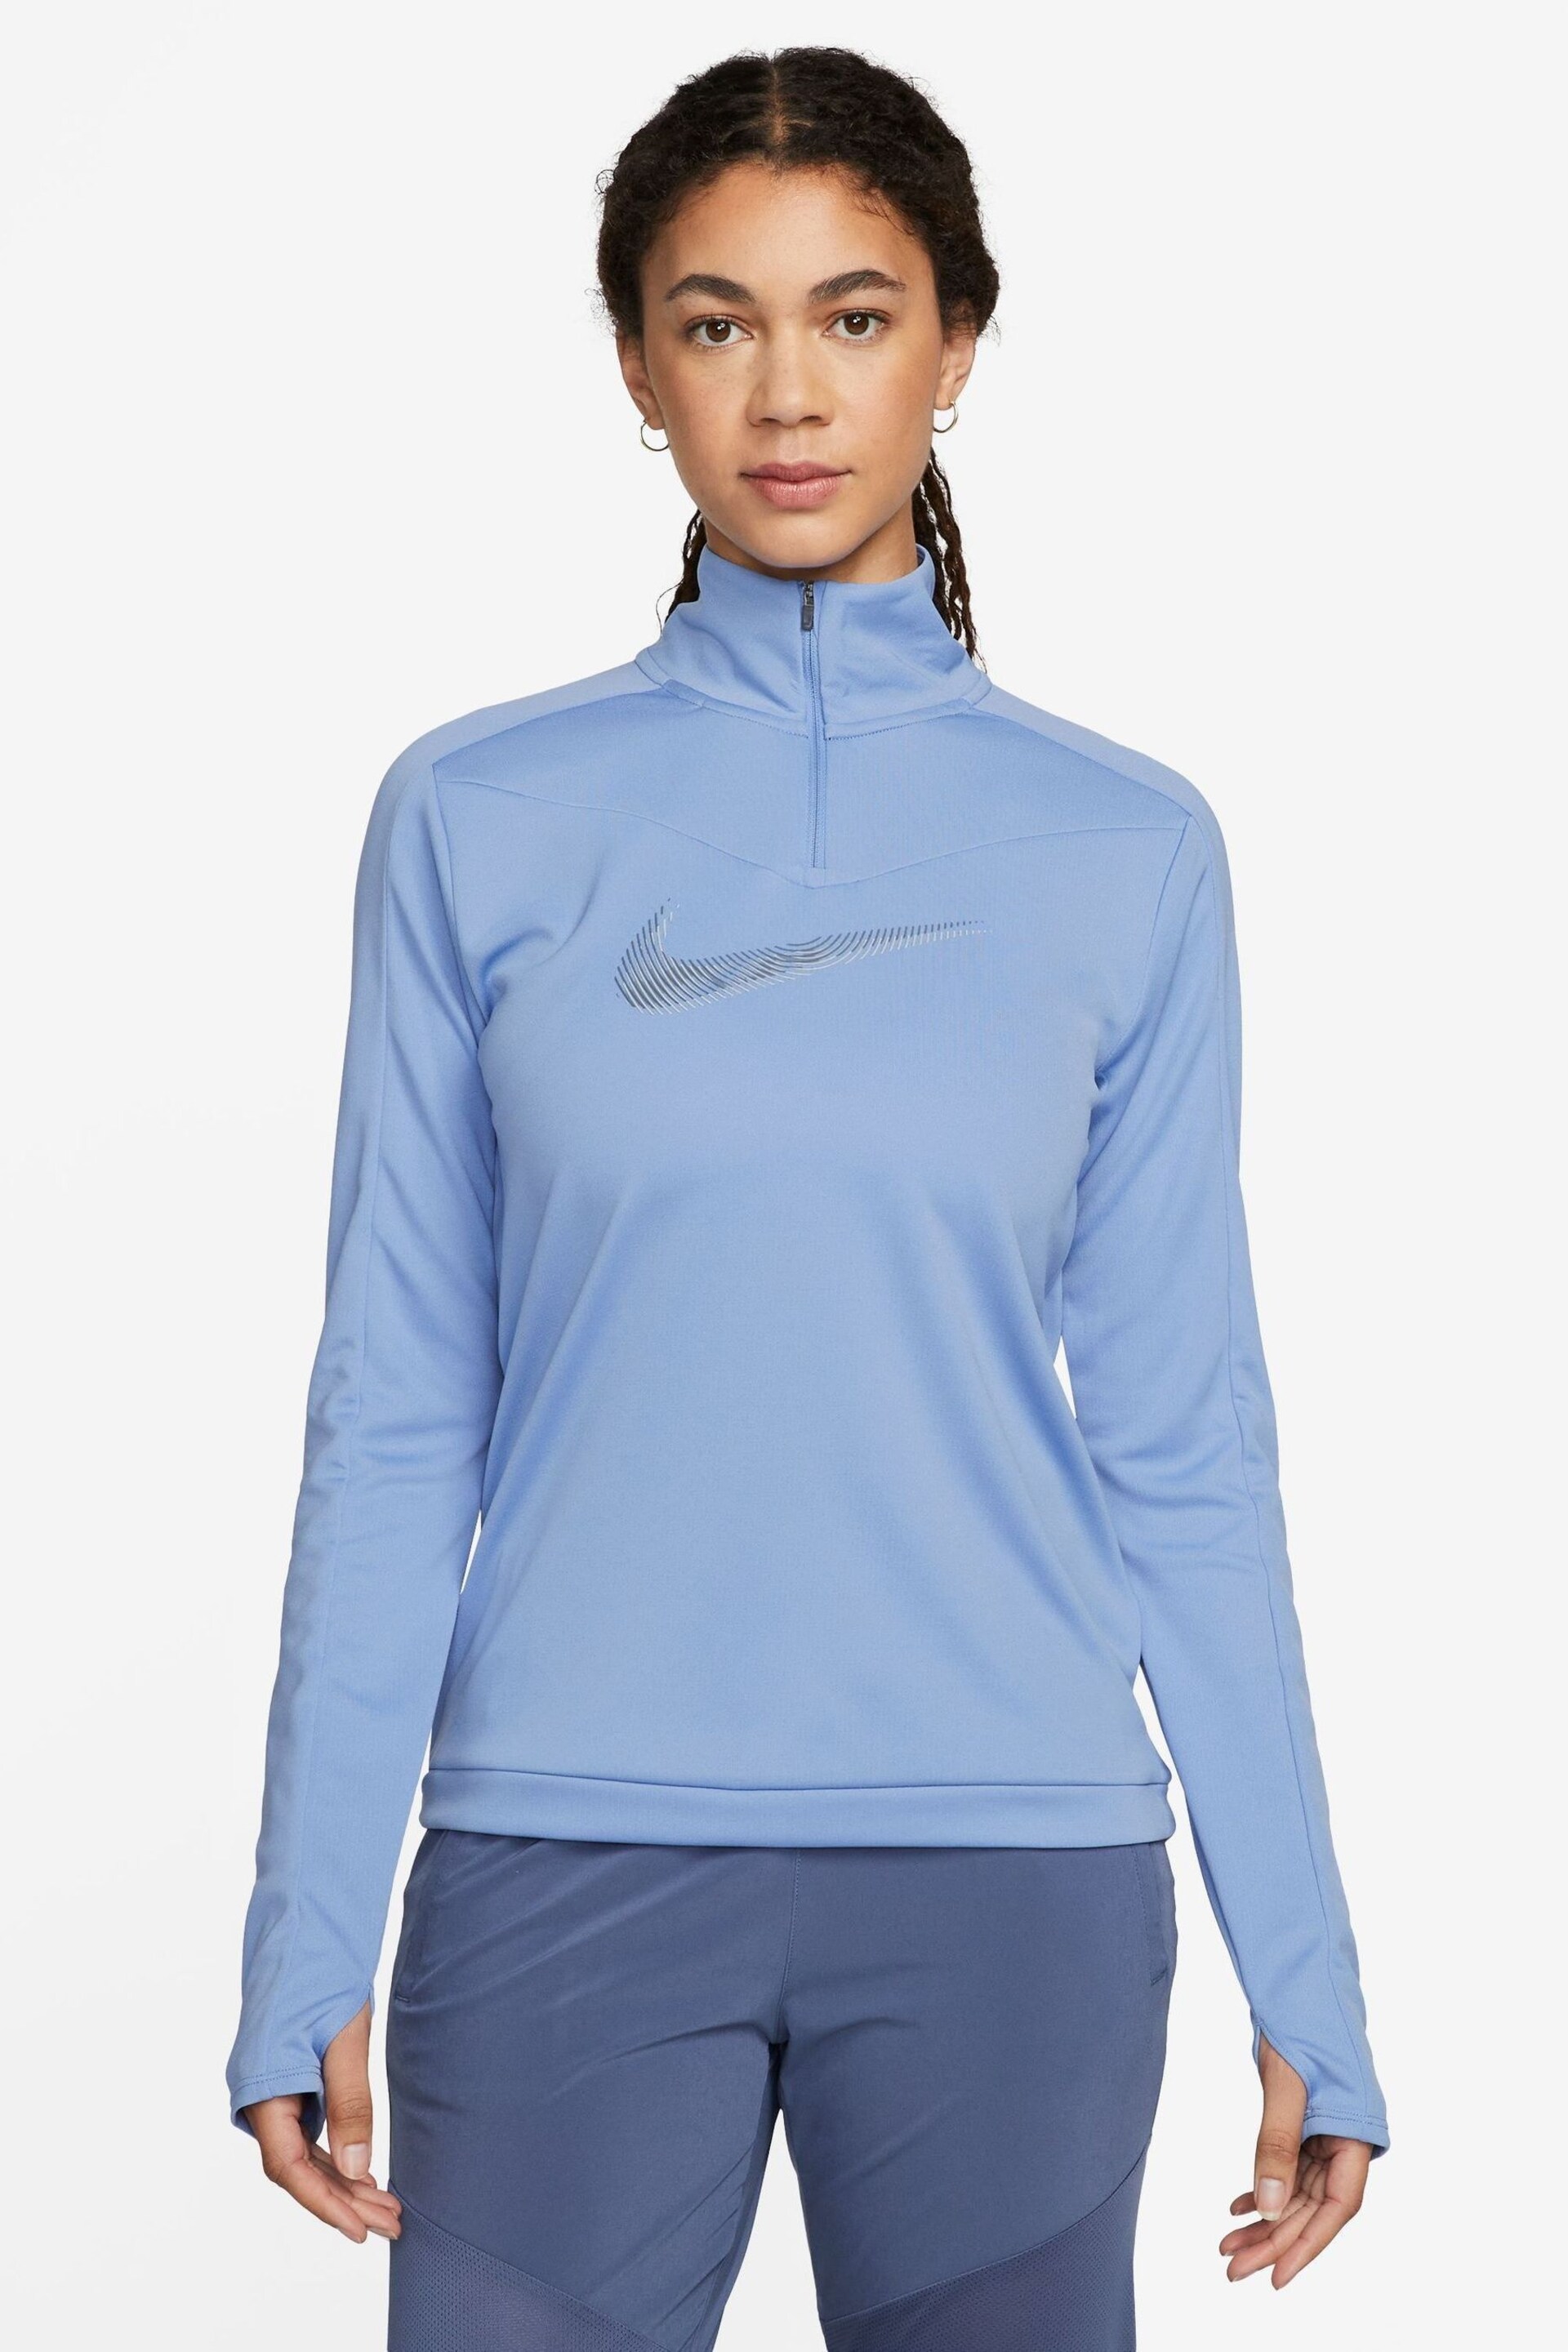 Nike Blue Dri-FIT Swoosh Half-Zip Running Top - Image 1 of 3